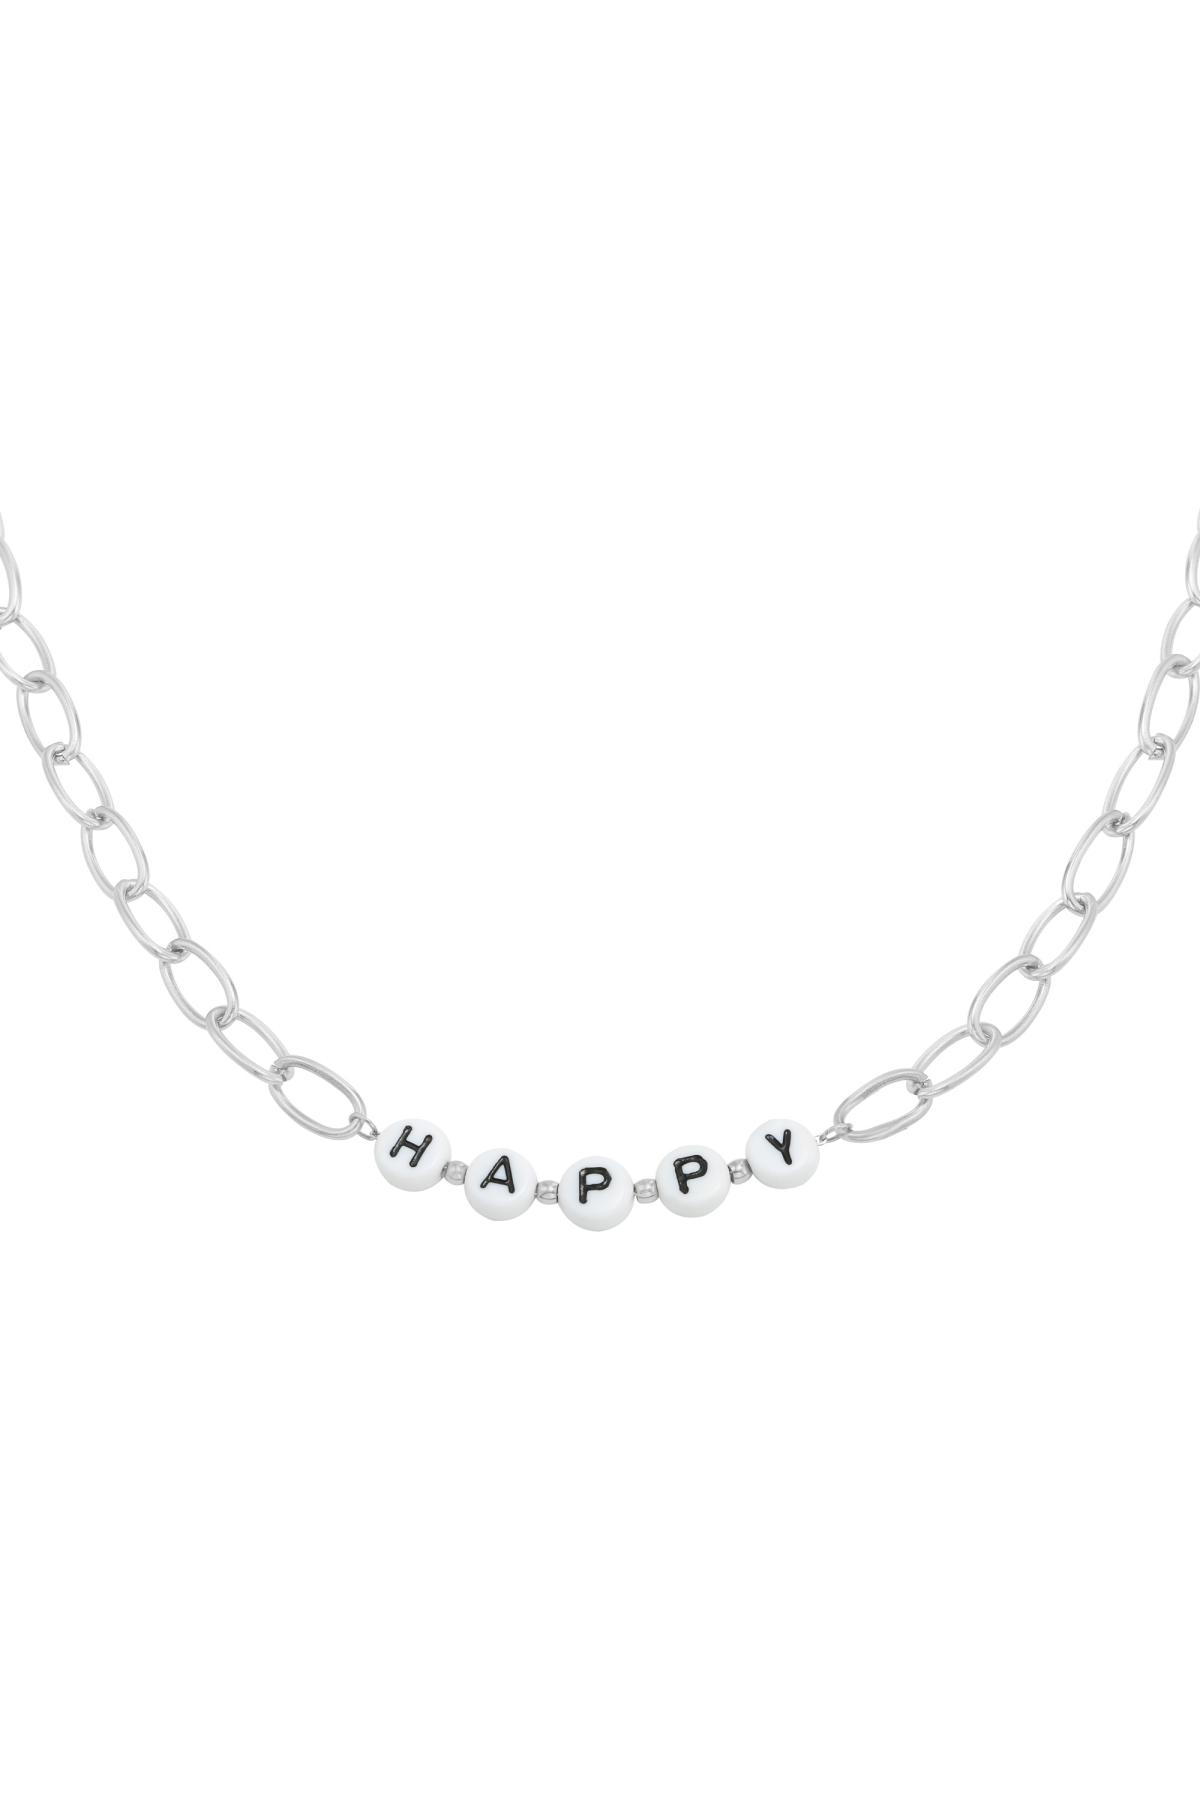 Halskette Beads Happy Silber Edelstahl